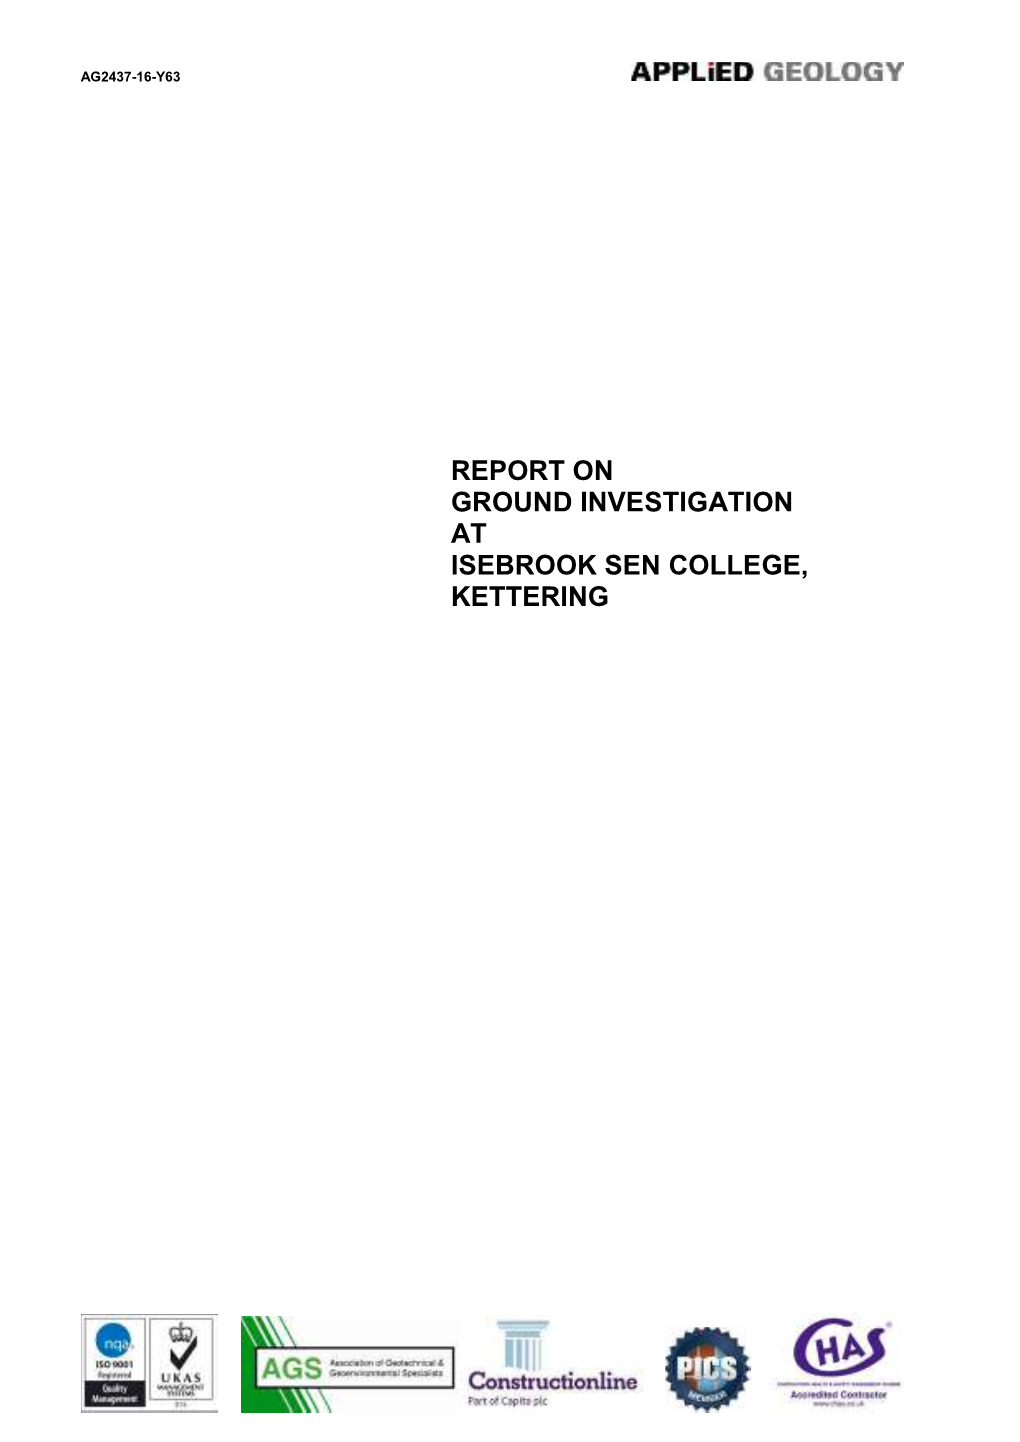 Report on Ground Investigation at Isebrook Sen College, Kettering